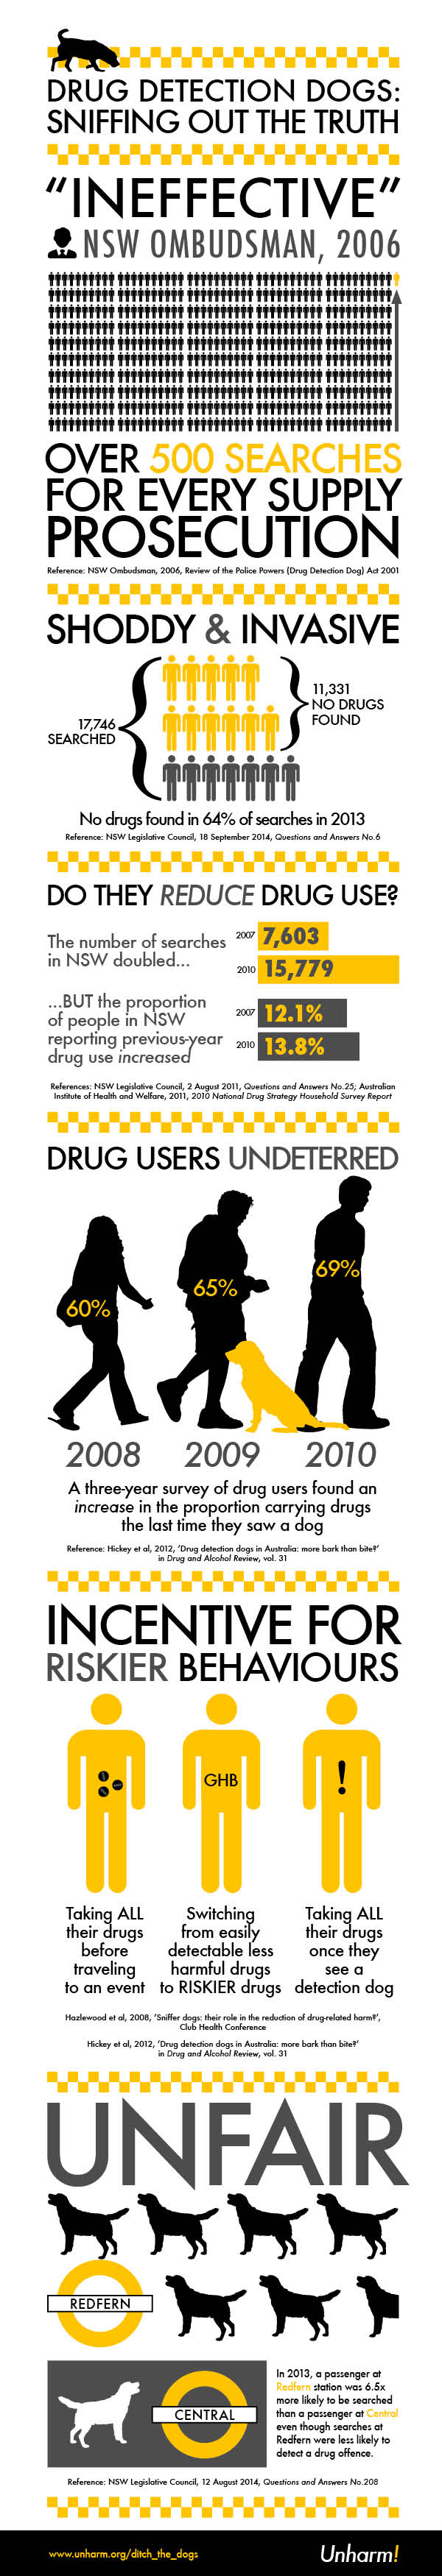 unharm-drug-detection-dogs-full-infographic-120215